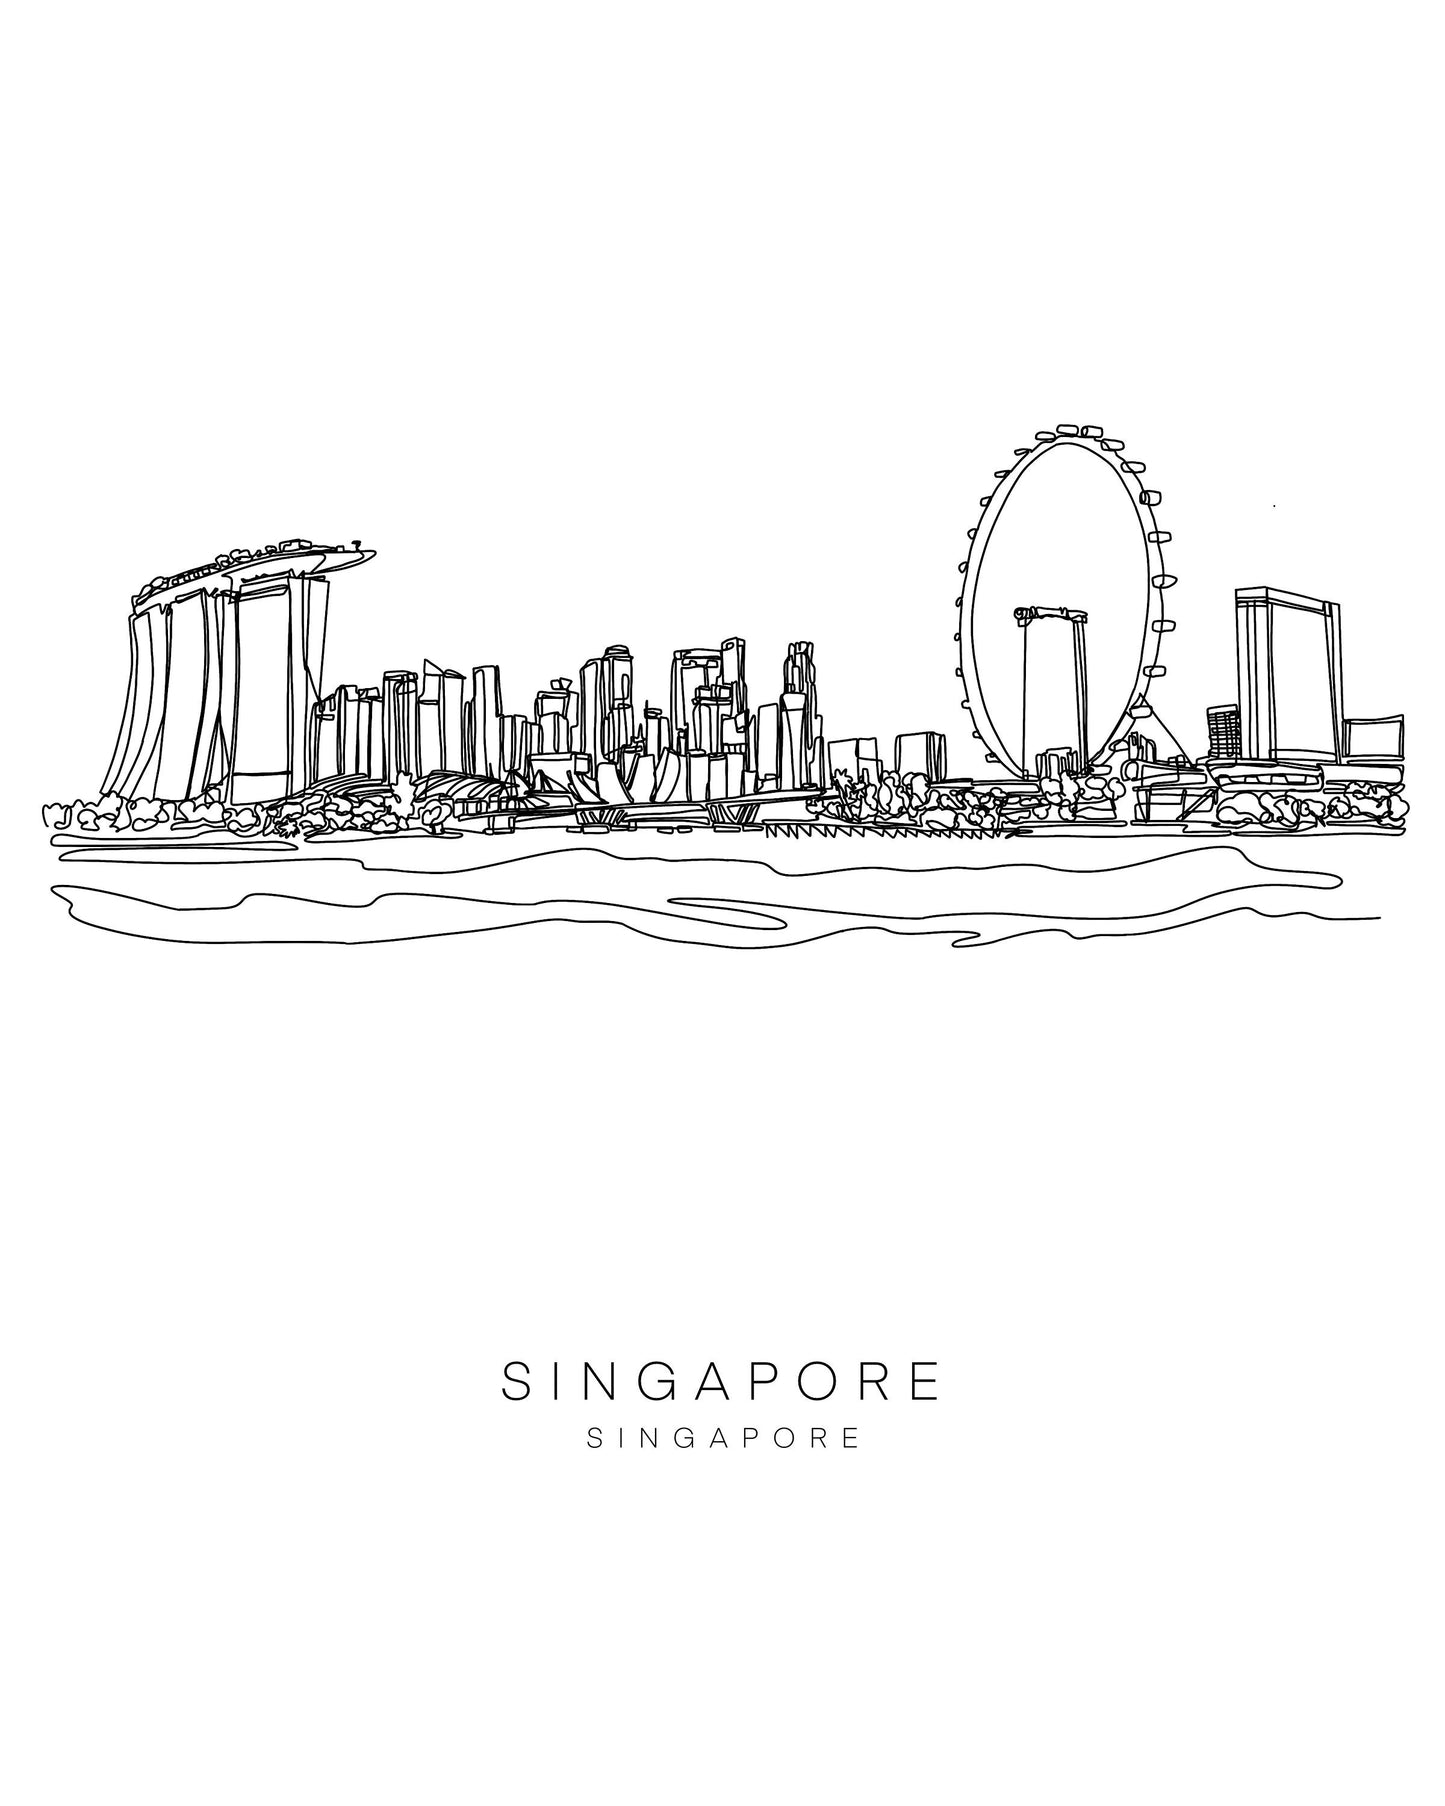 SINGAPORE SKYLINE  8x10 Single Line Art Print // Black and White // Unframed